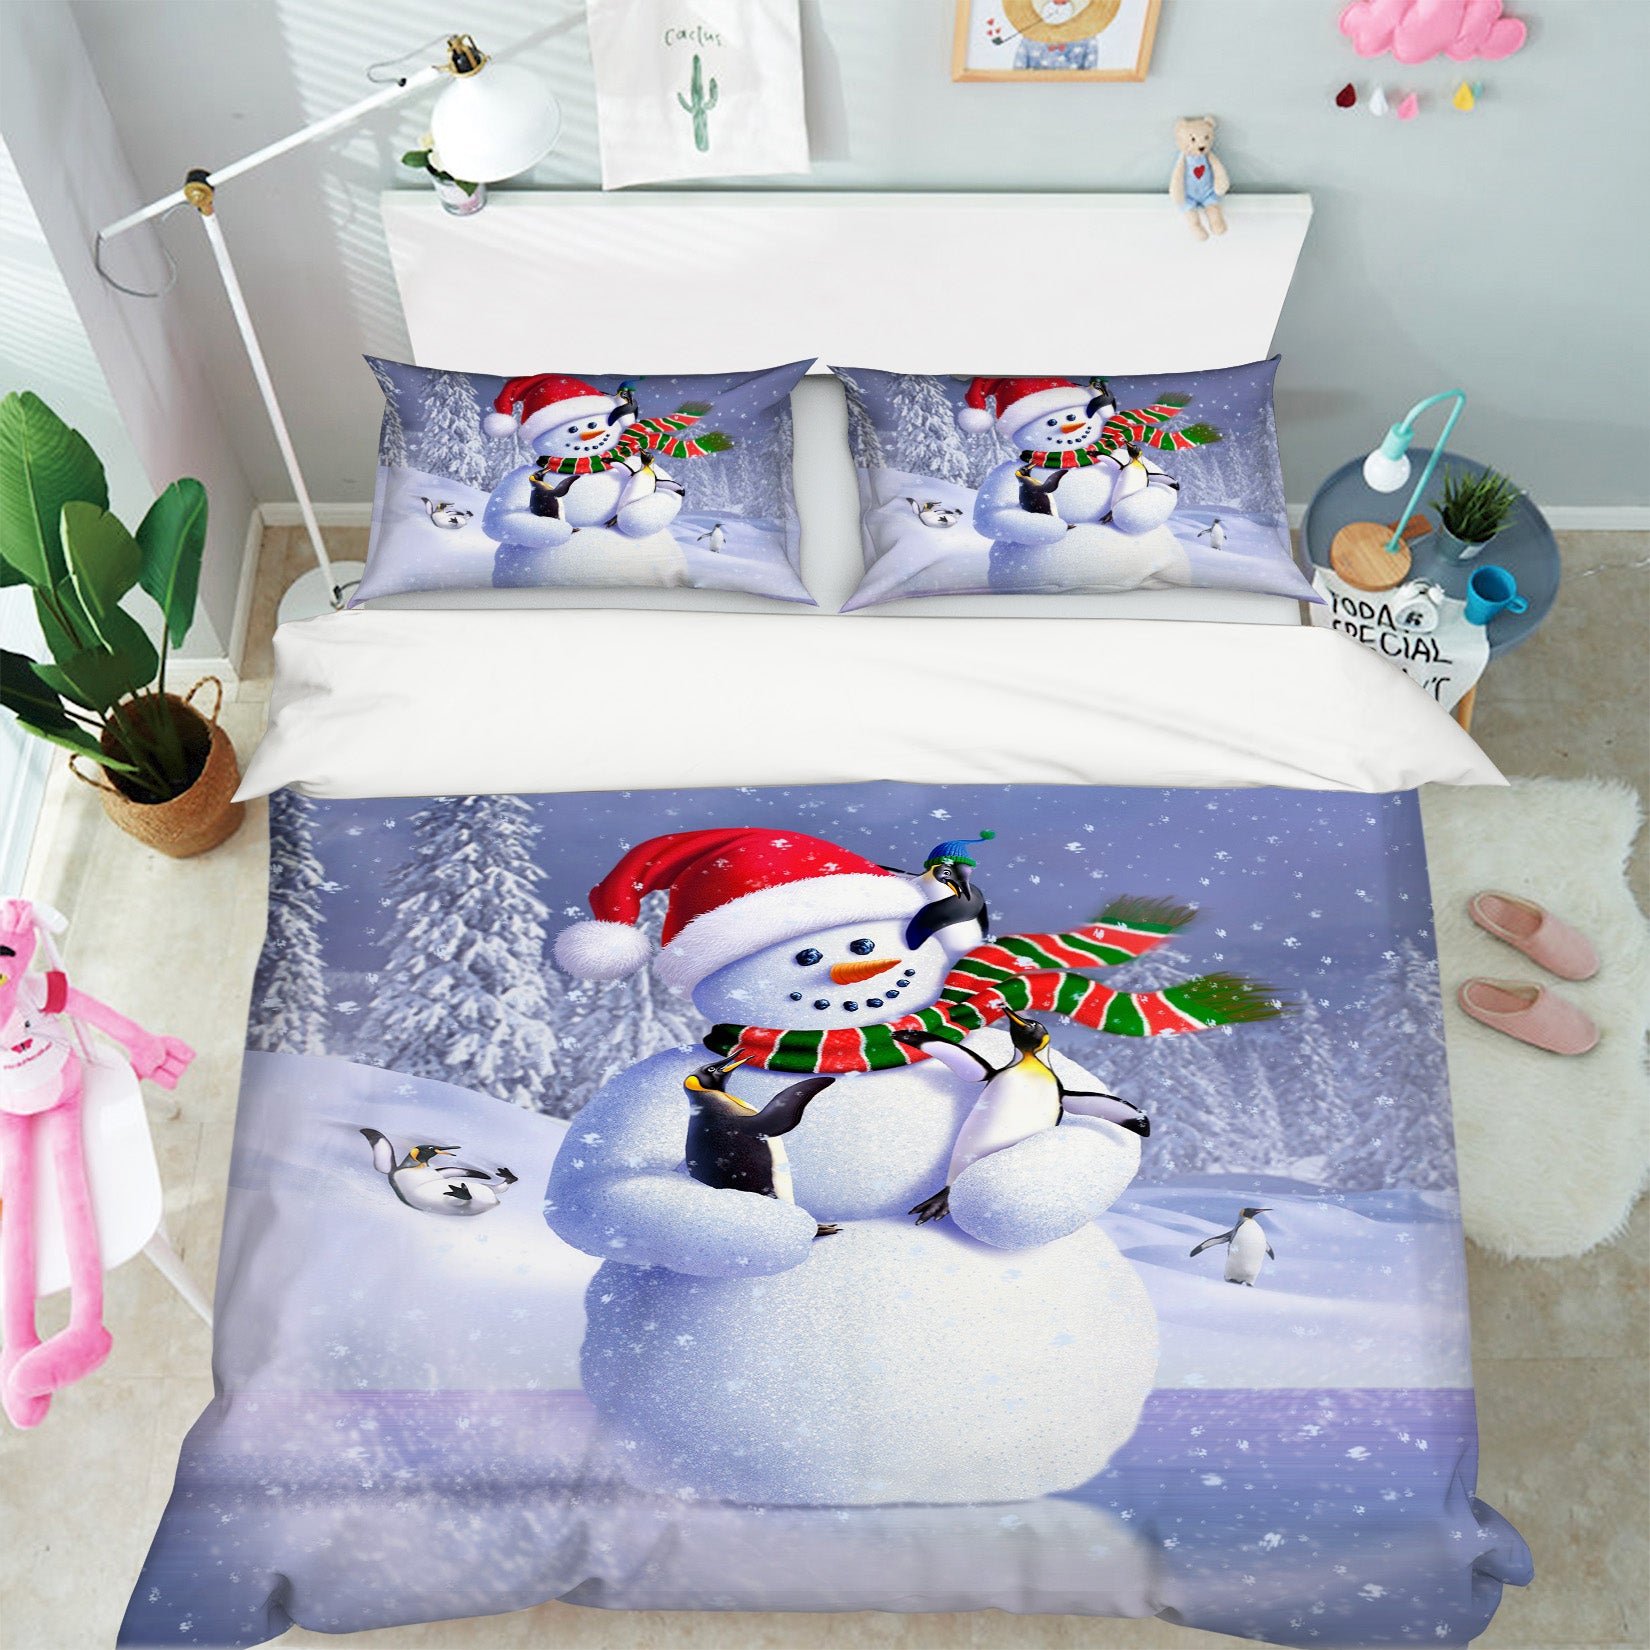 3D Snowman 86045 Jerry LoFaro bedding Bed Pillowcases Quilt